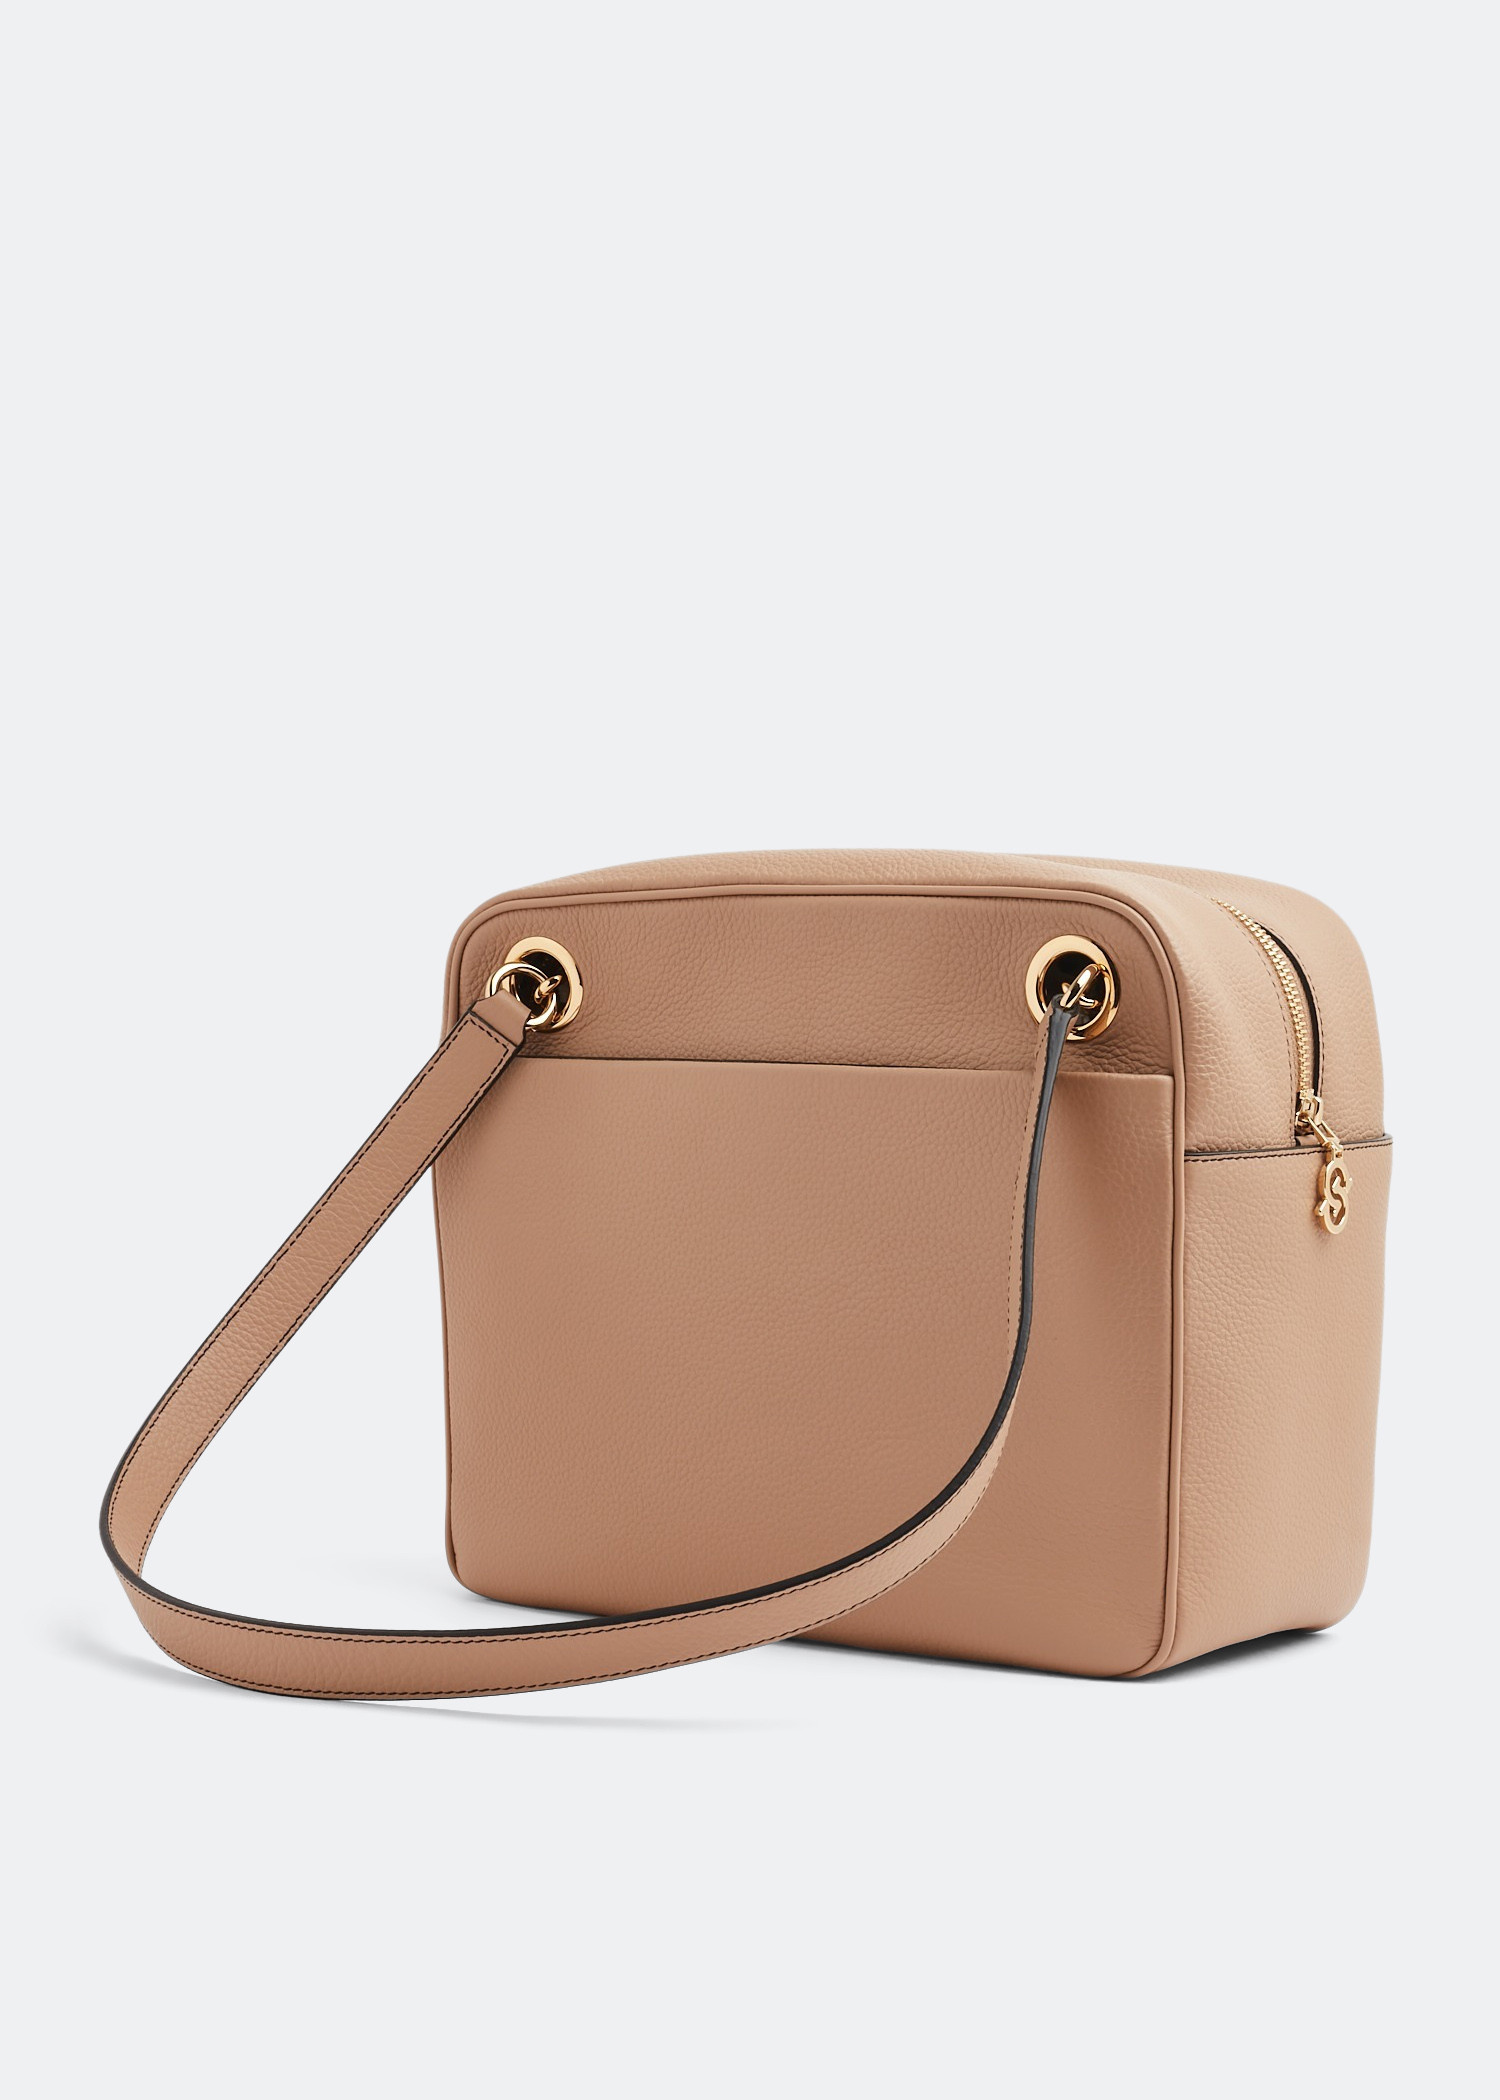 Ferragamo Iconic shoulder bag for Women - Beige in KSA | Level Shoes